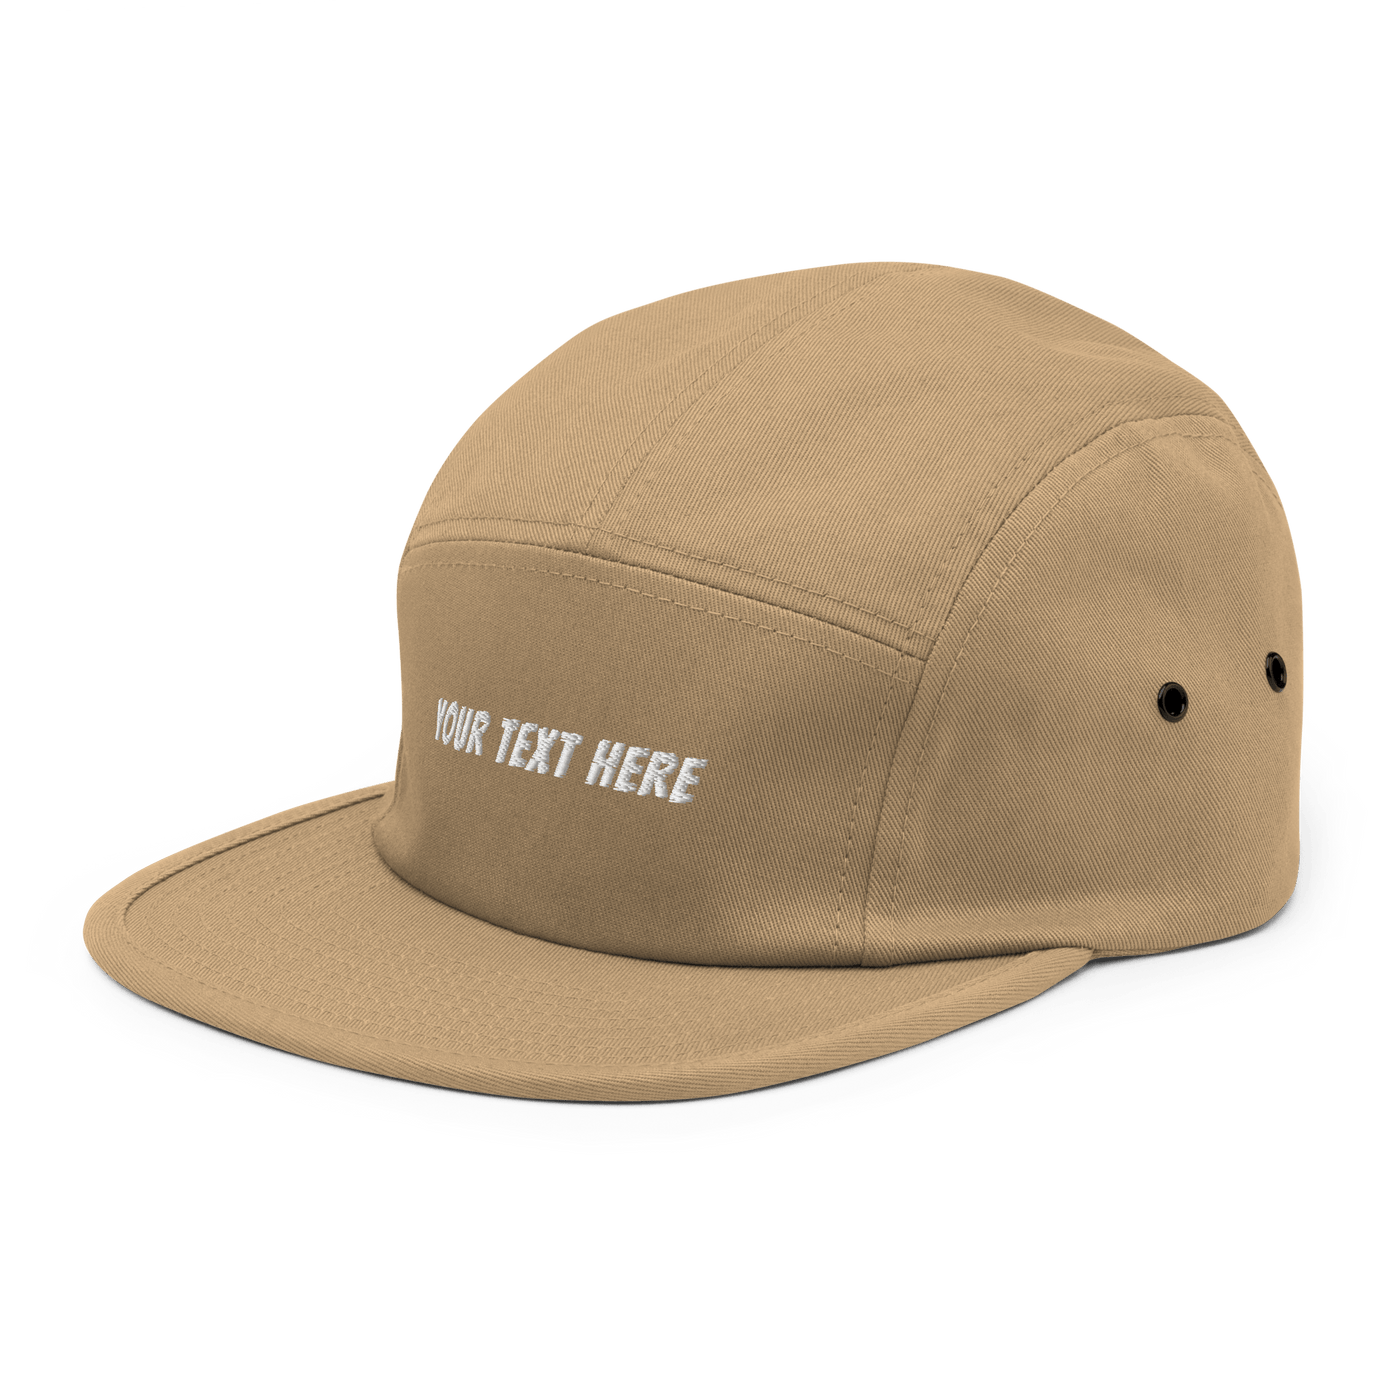 Customize Your Own Five Panel Cap - Khaki - - Just Another Cap Store